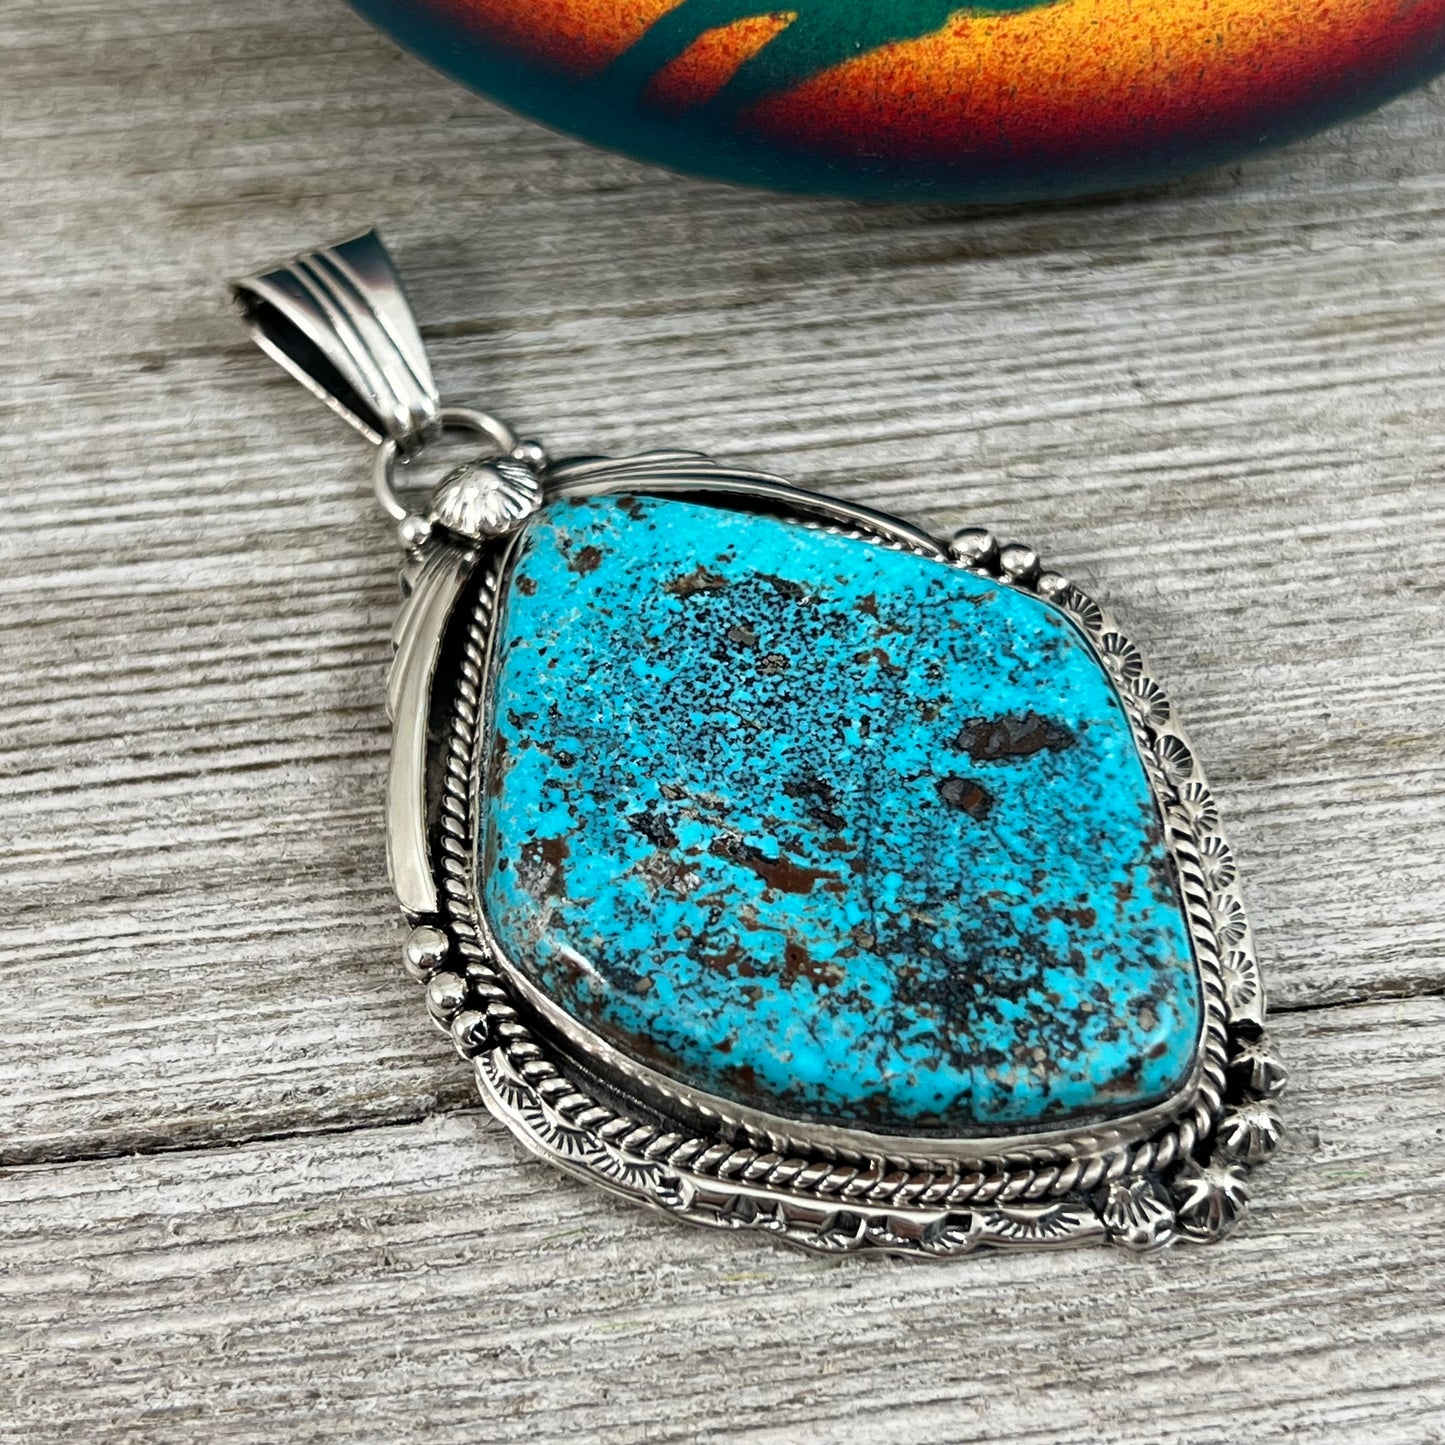 XL extra large, Blue Kingman turquoise pendant #3, Navajo handmade Rita Long, sterling silver, signed